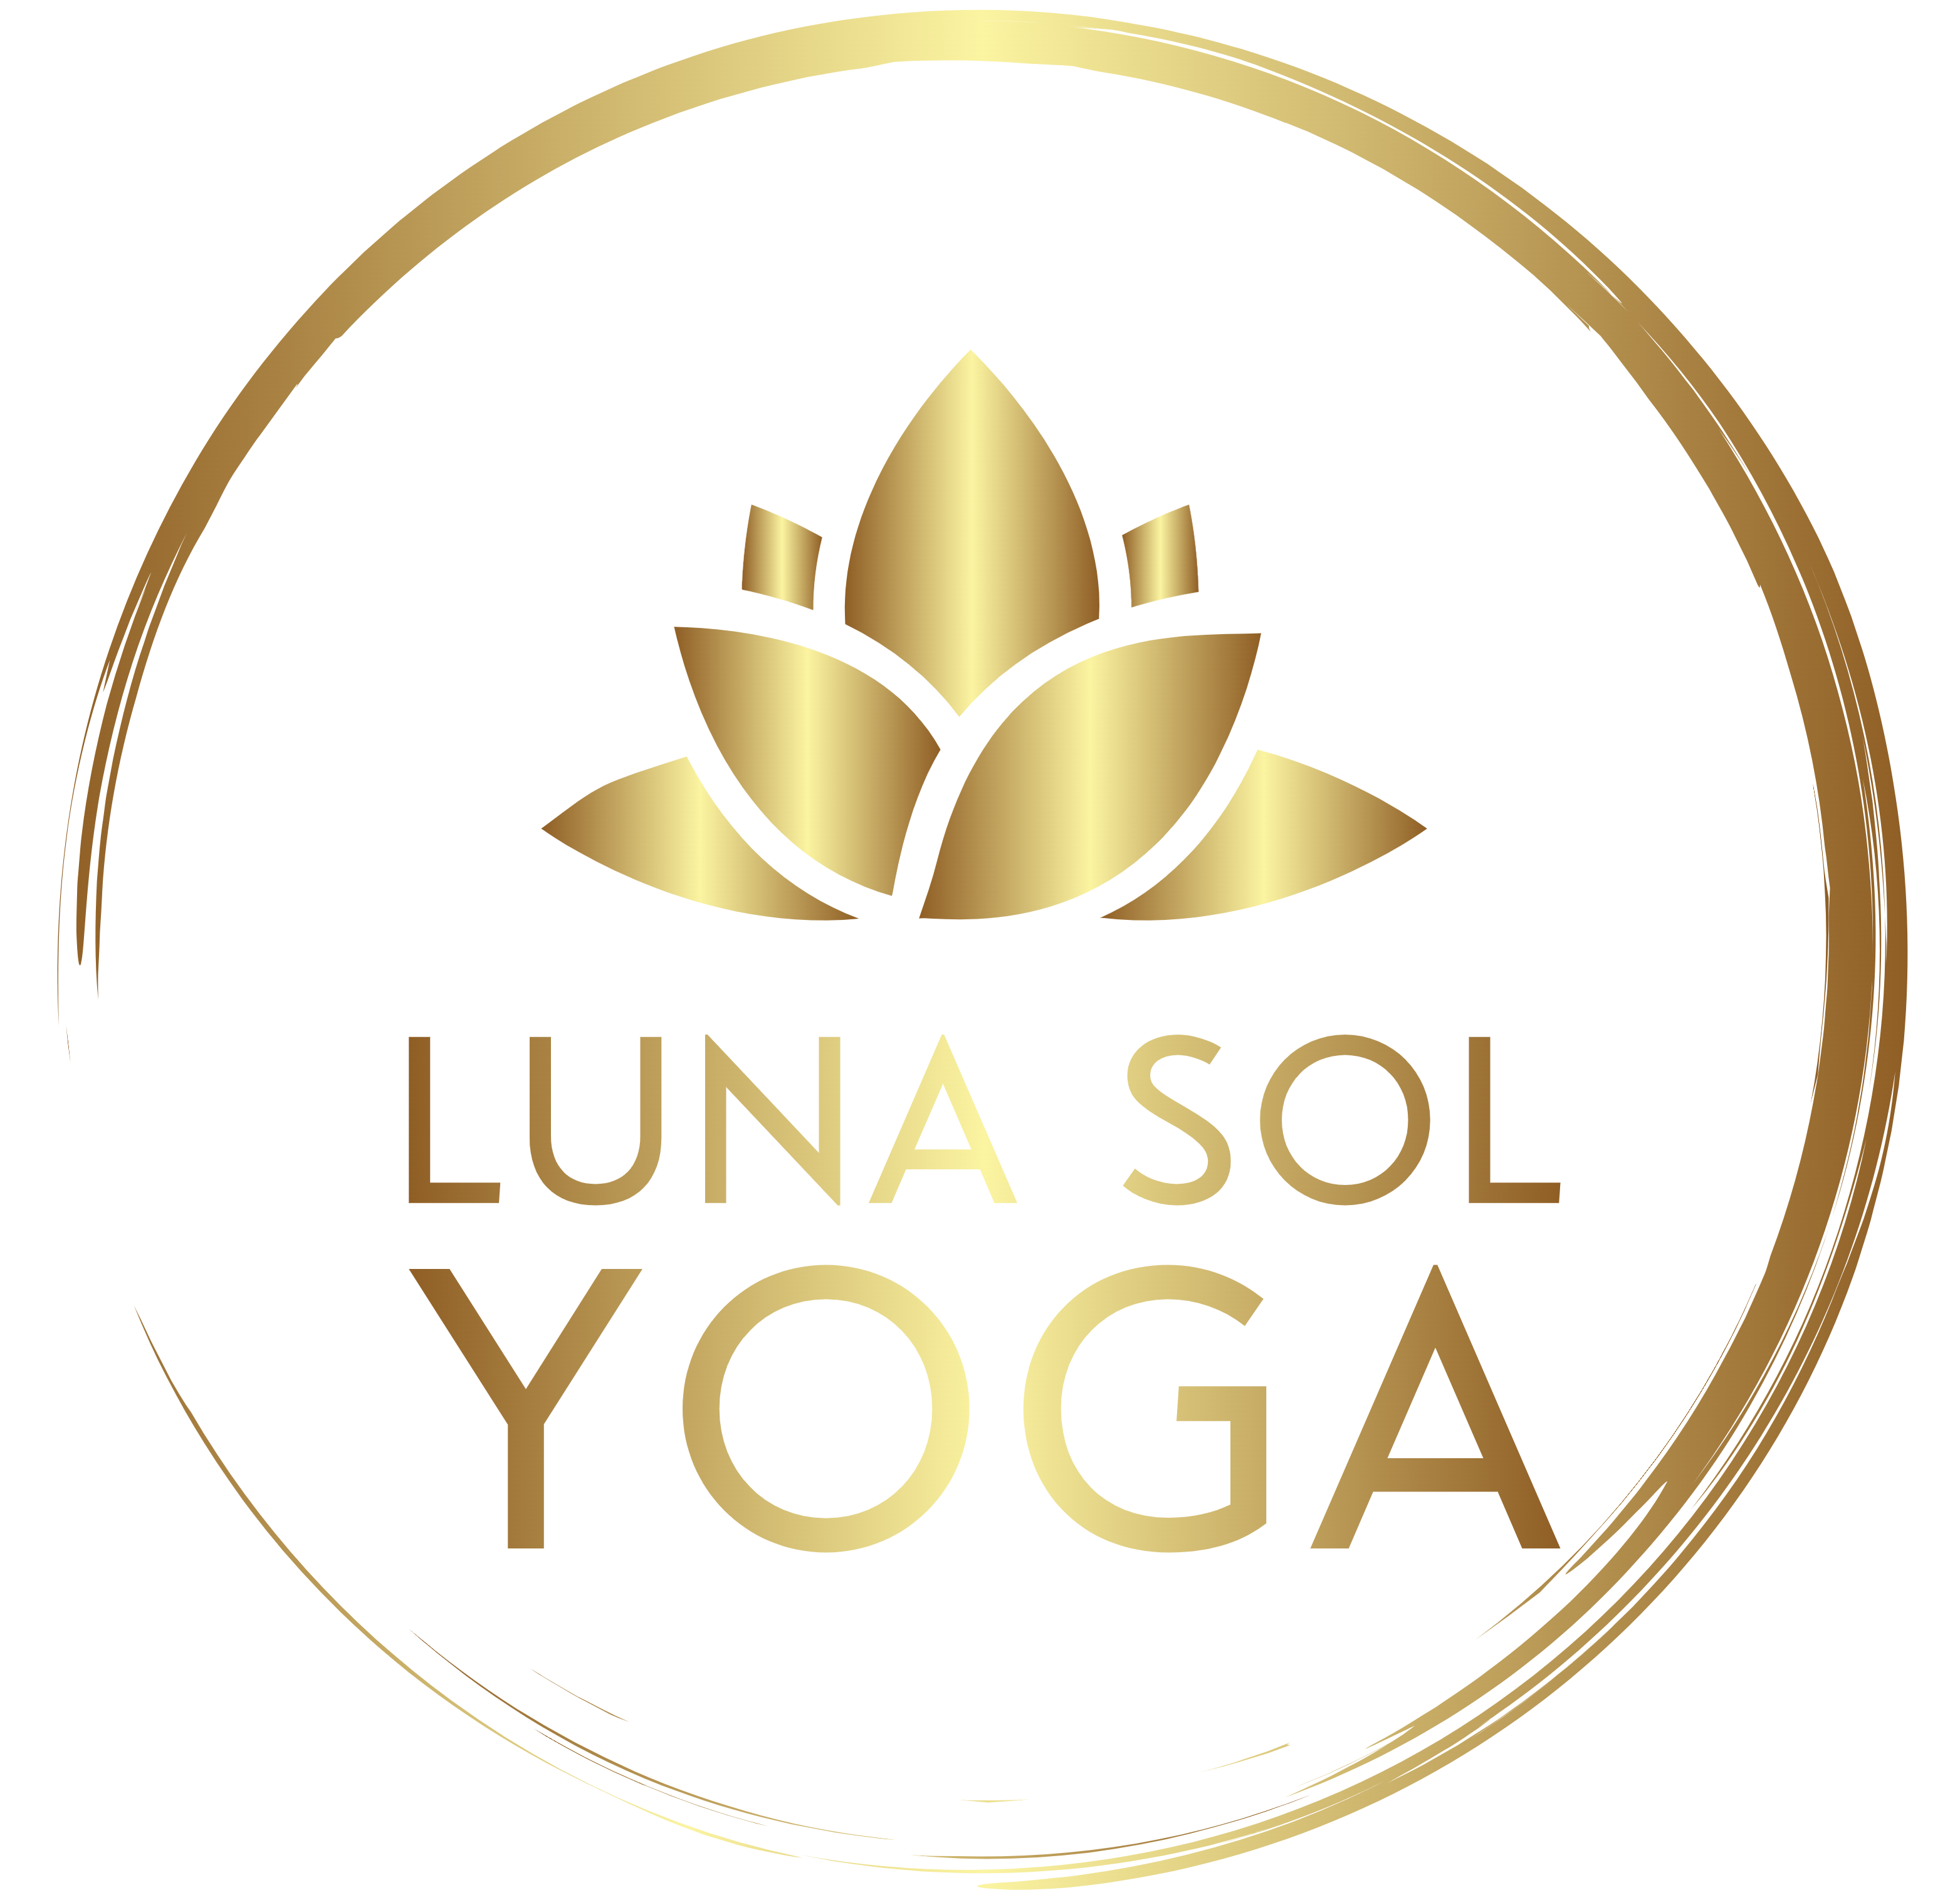 Luna Sol Yoga - Home - About Us